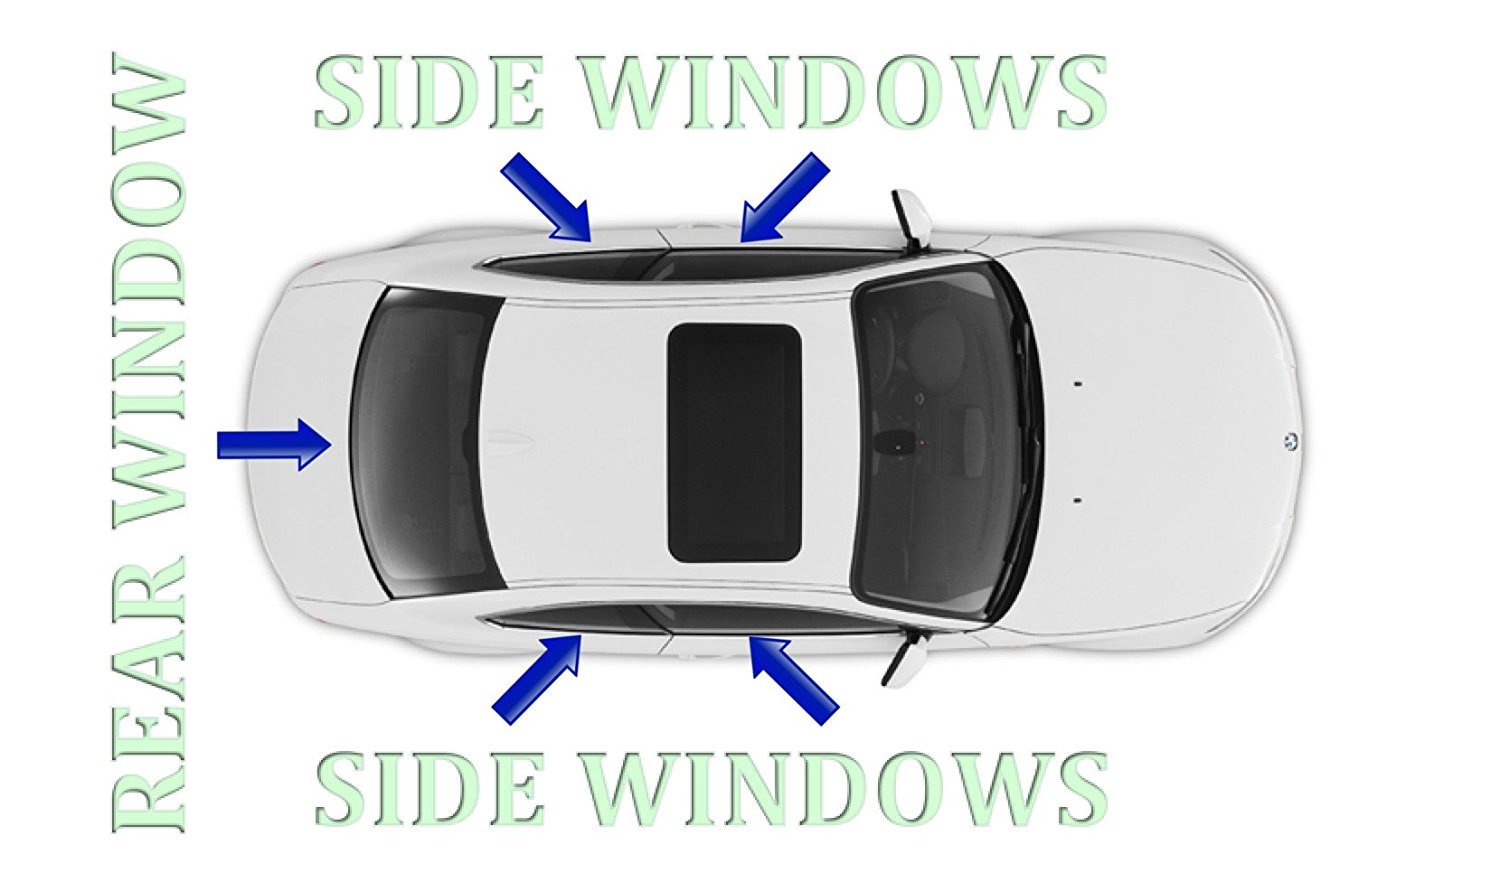 Autotech Park Precut Window Tinting Film for 2016-2020 Nissan Maxima Sedan